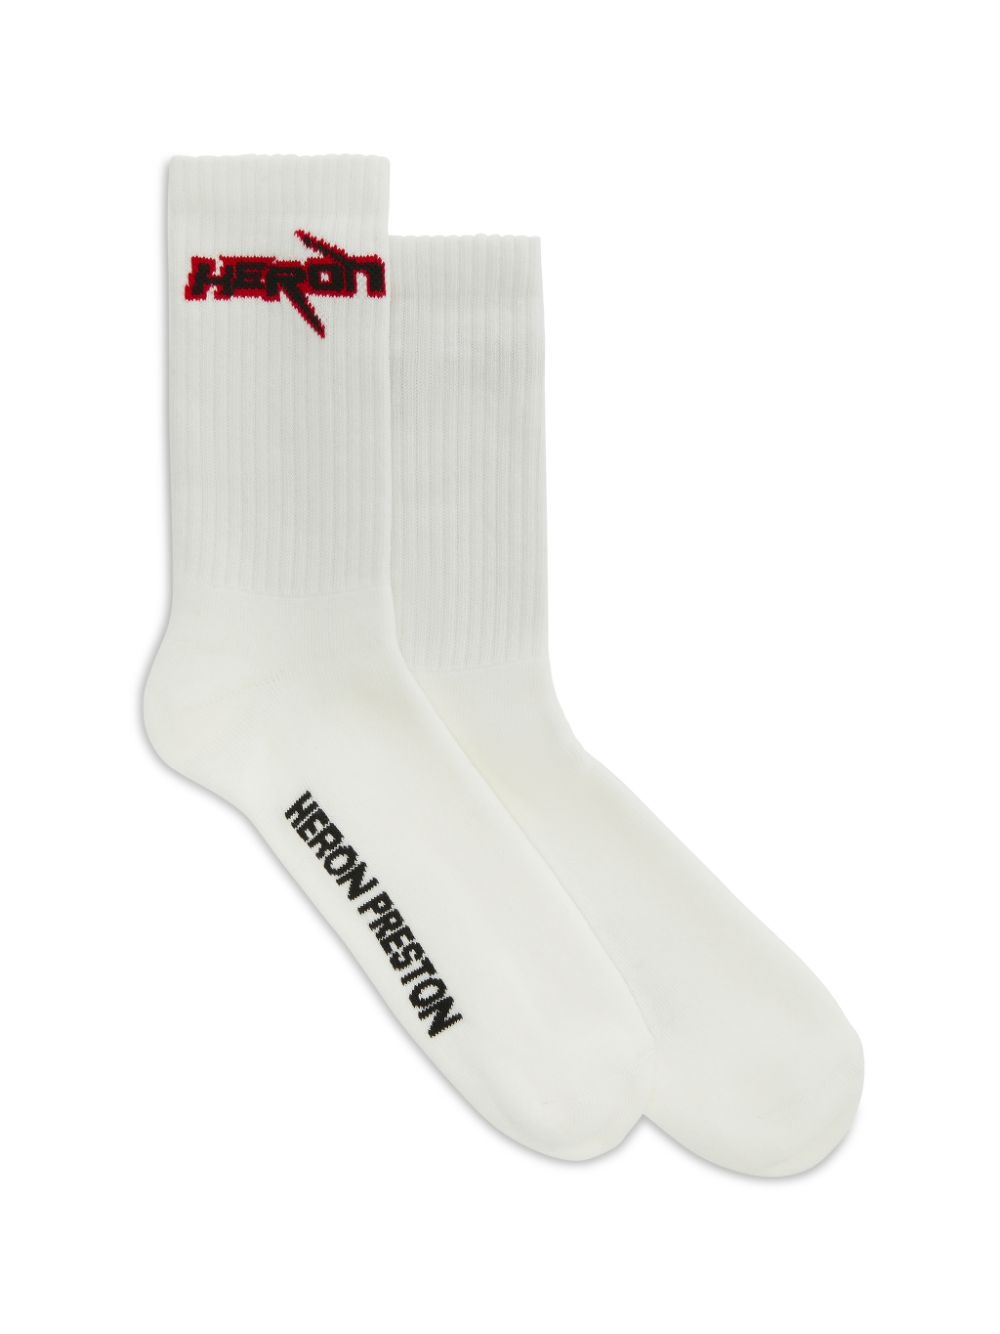 Race Heron Long Socks - 1